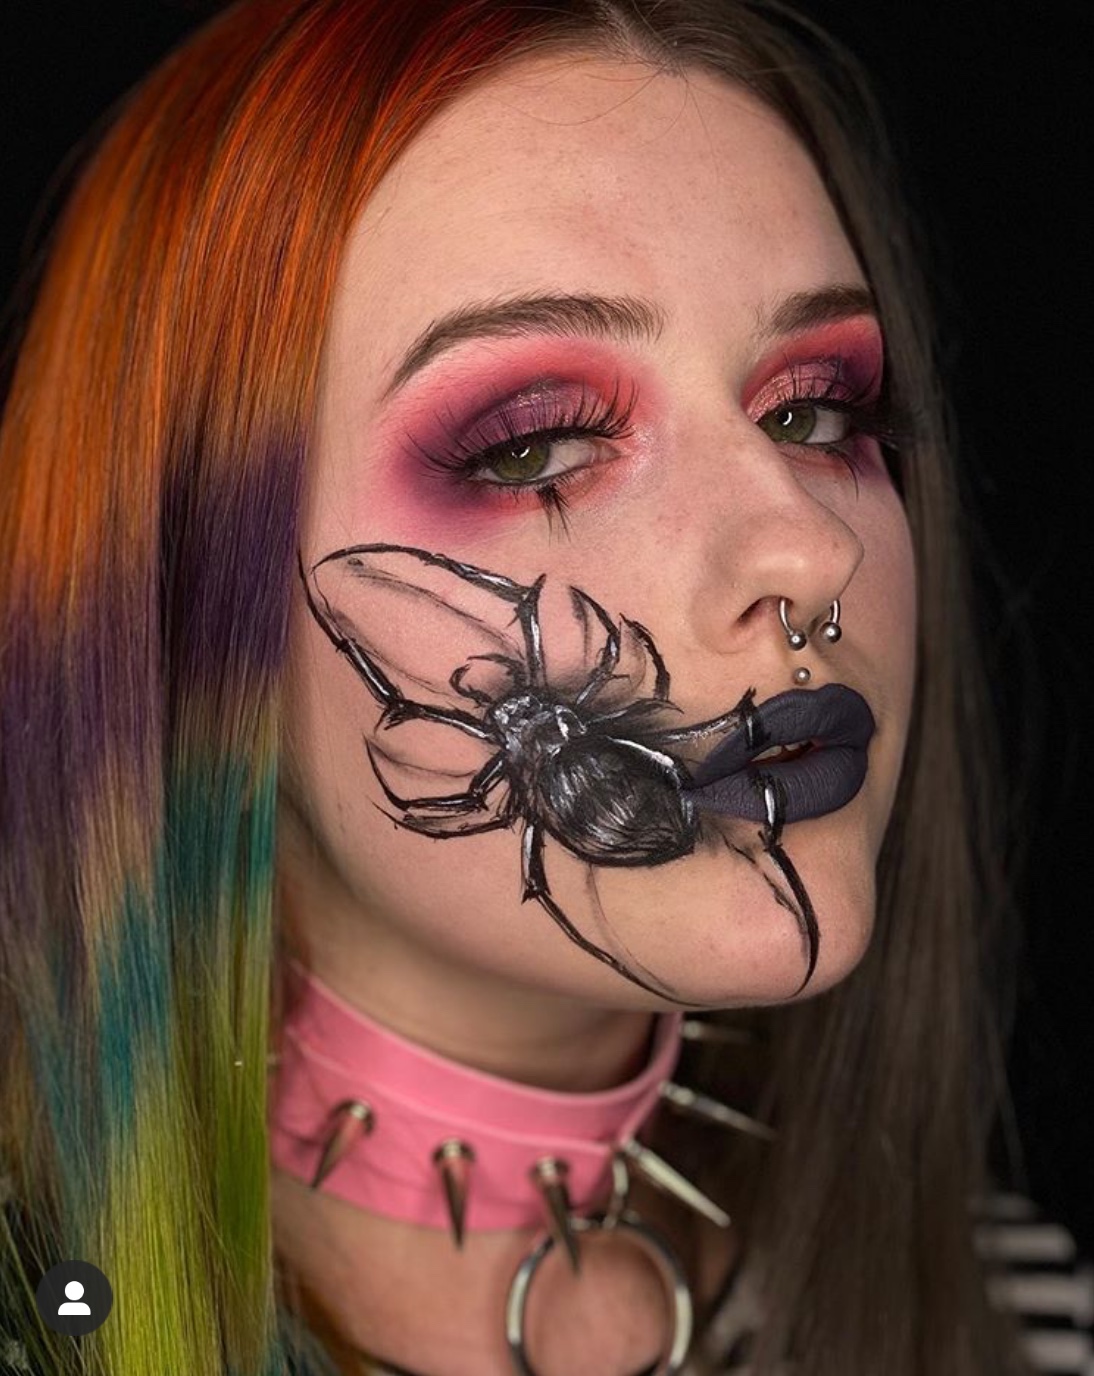 balance motivet Wardian sag Creepy Spider Makeup For Halloween 2020 - The Glossychic